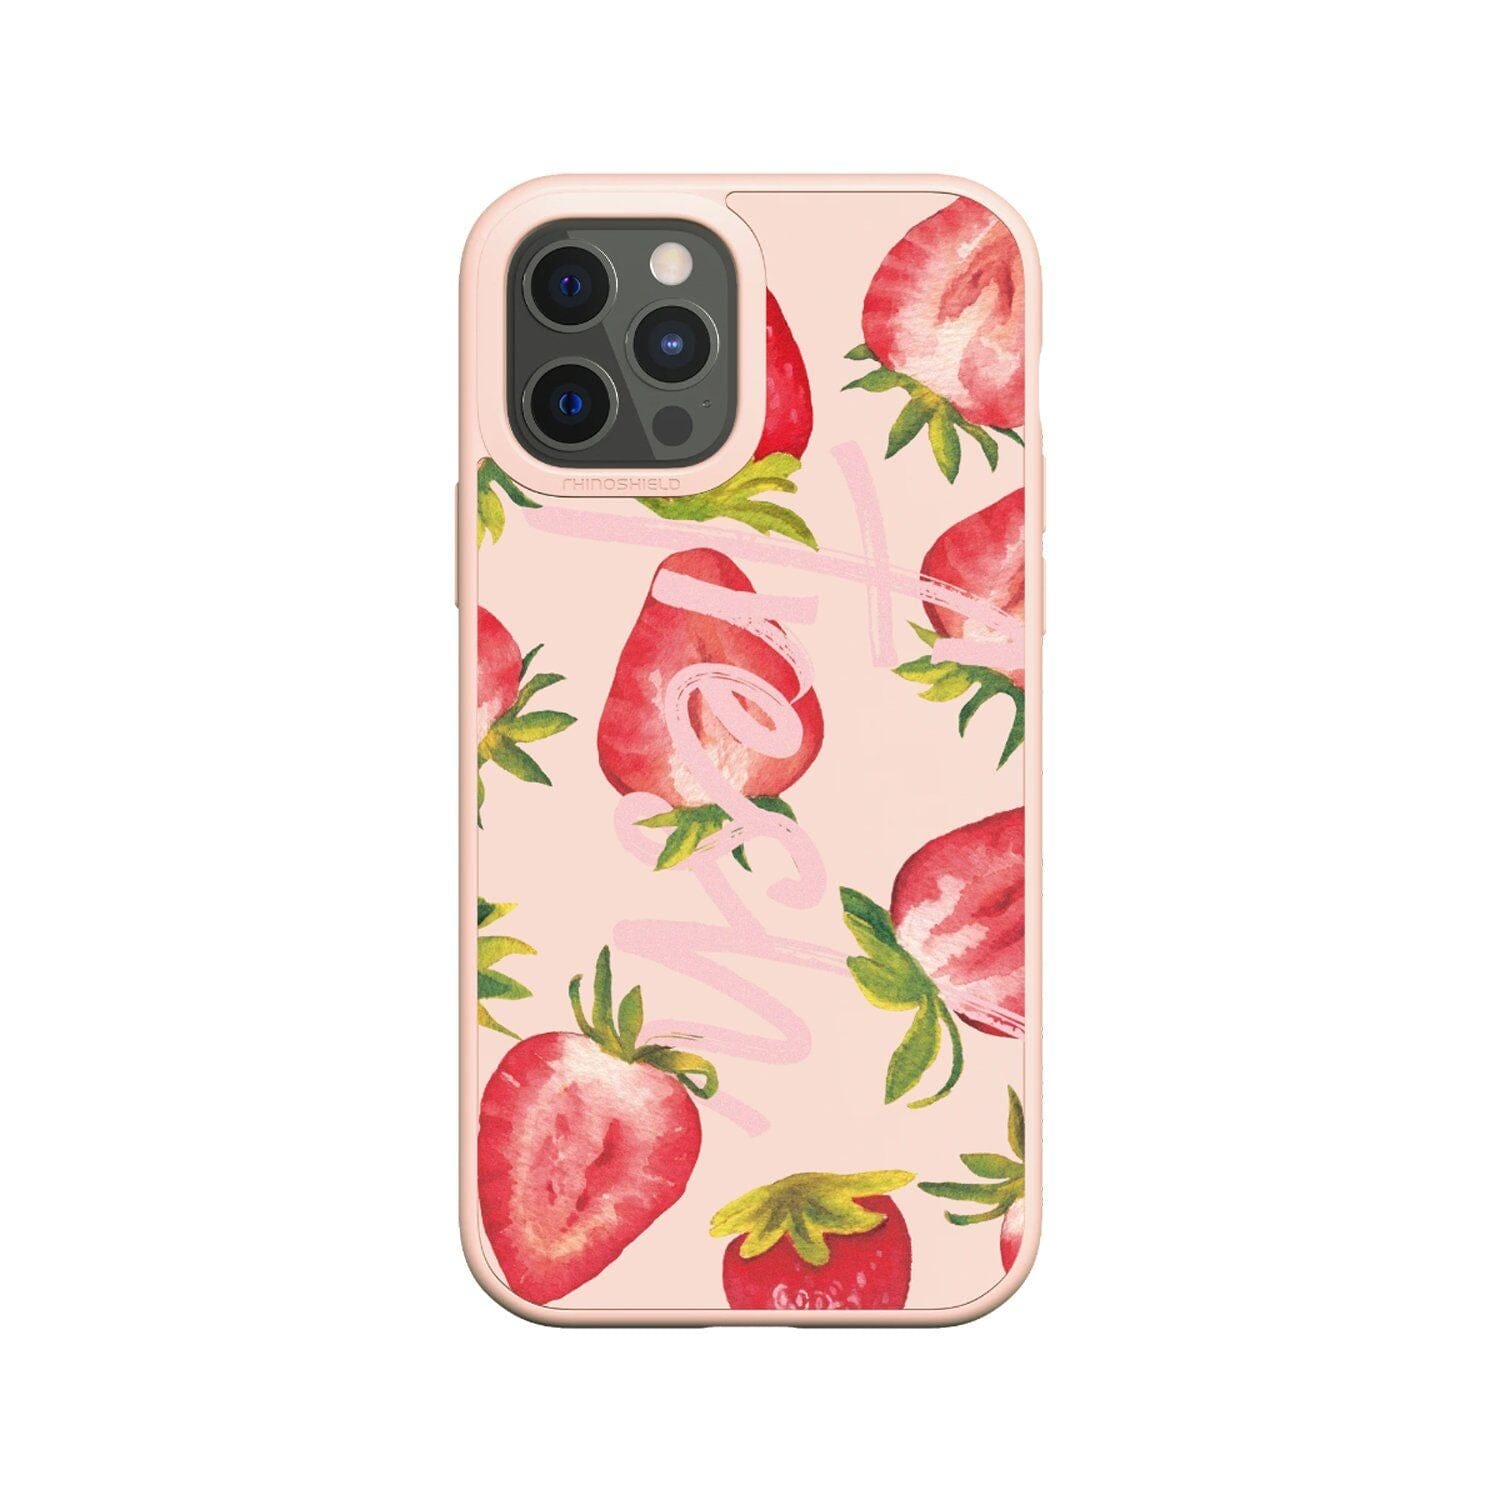 RhinoShield SolidSuit Design Case for iPhone 12 Series (2020) Default RhinoShield iPhone 12 Pro Max 6.7" Pink/Sweet Strawberries 